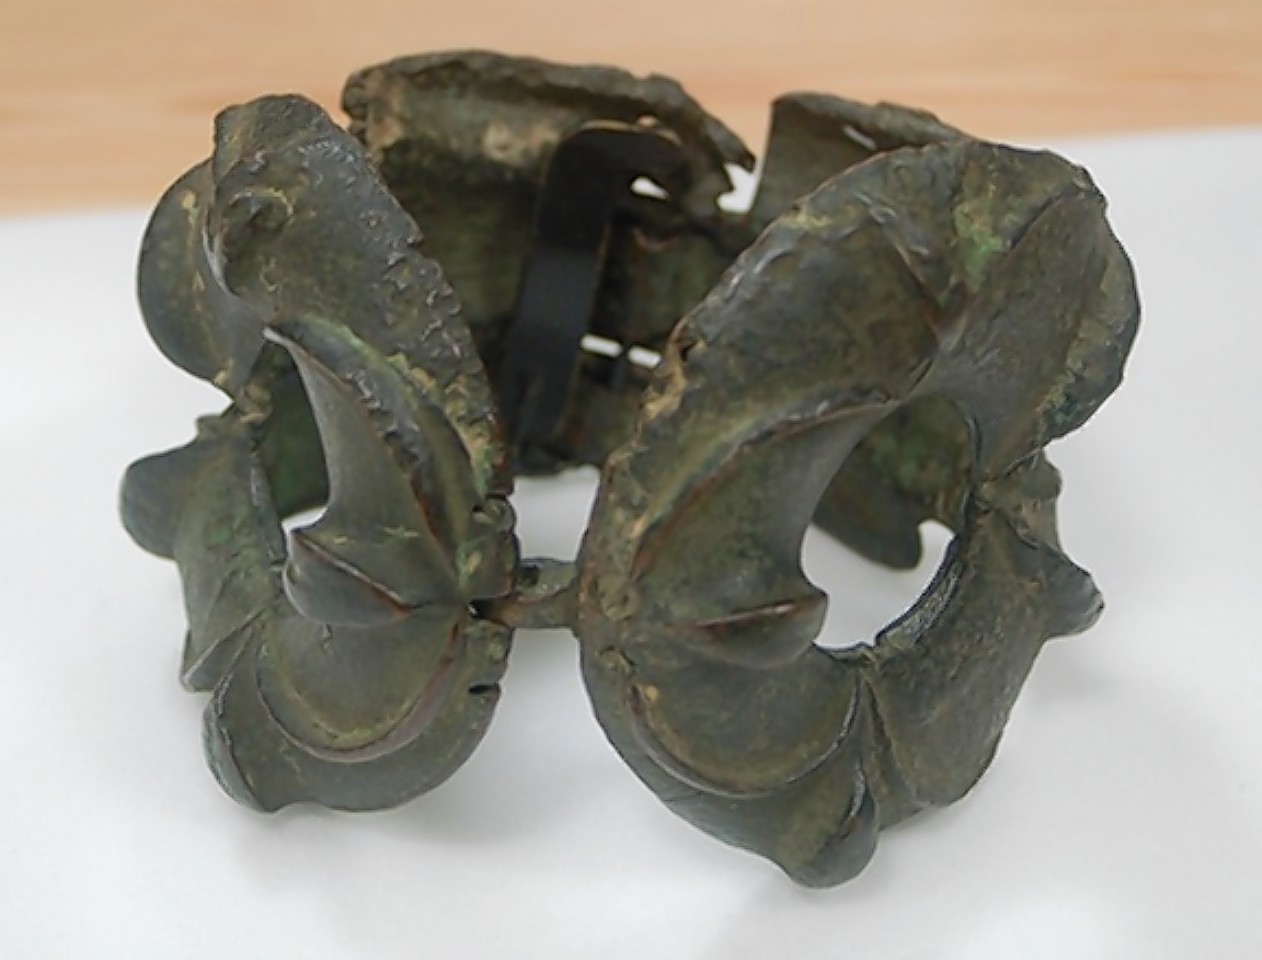 The Bronze Age amulet returned to Shetland